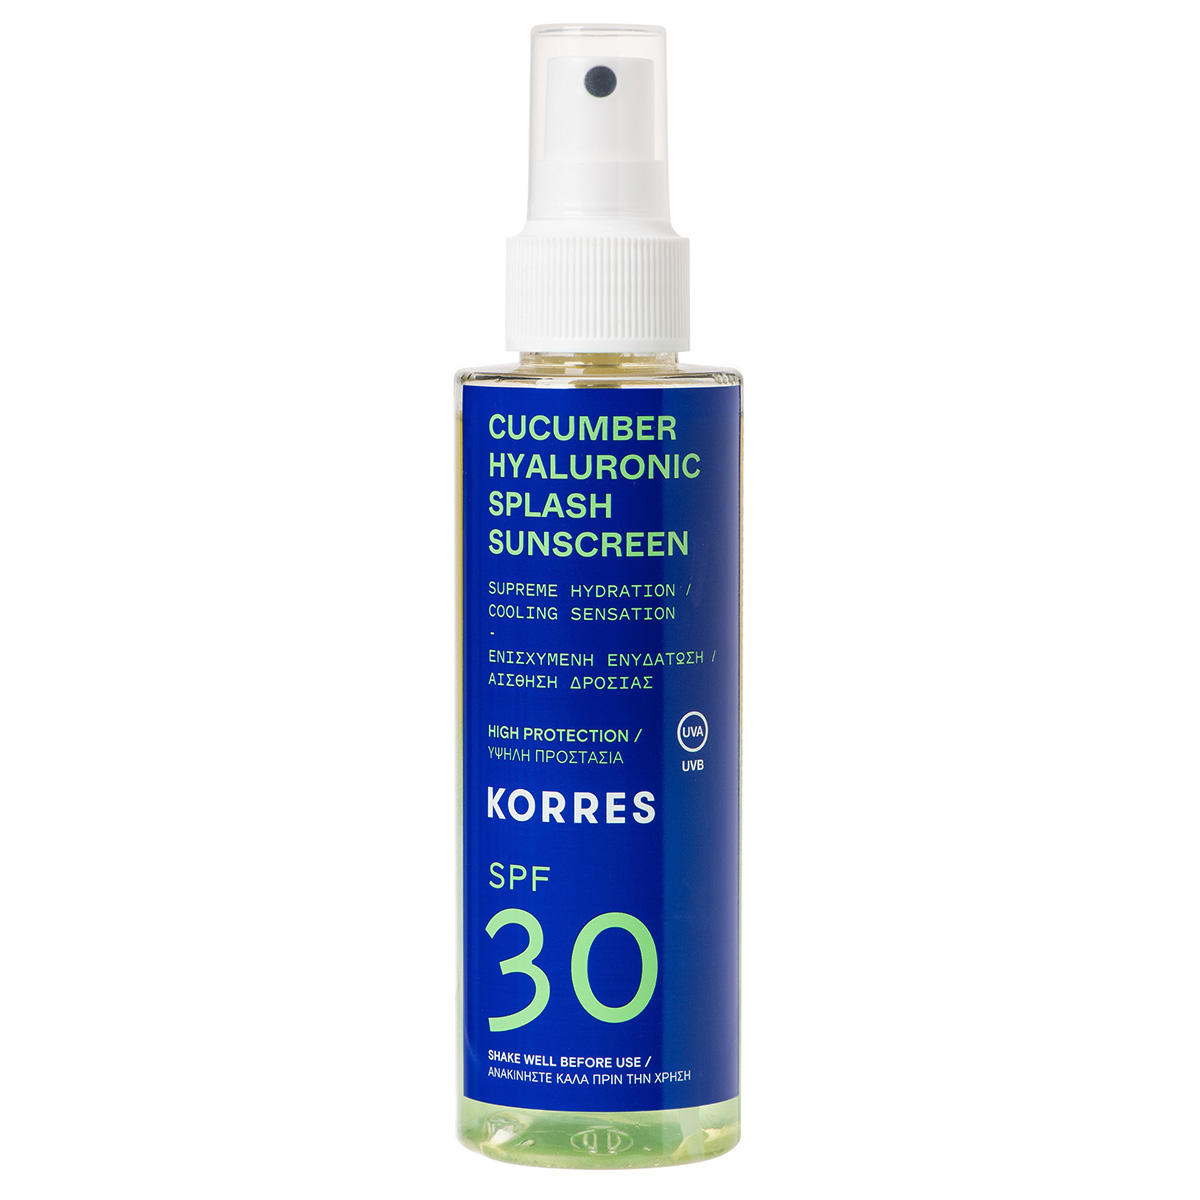 KORRES Cucumber Hyaluronic Splash 2 Phase Sunscreen Spray for Face and Body SPF 30 150 ml - 1